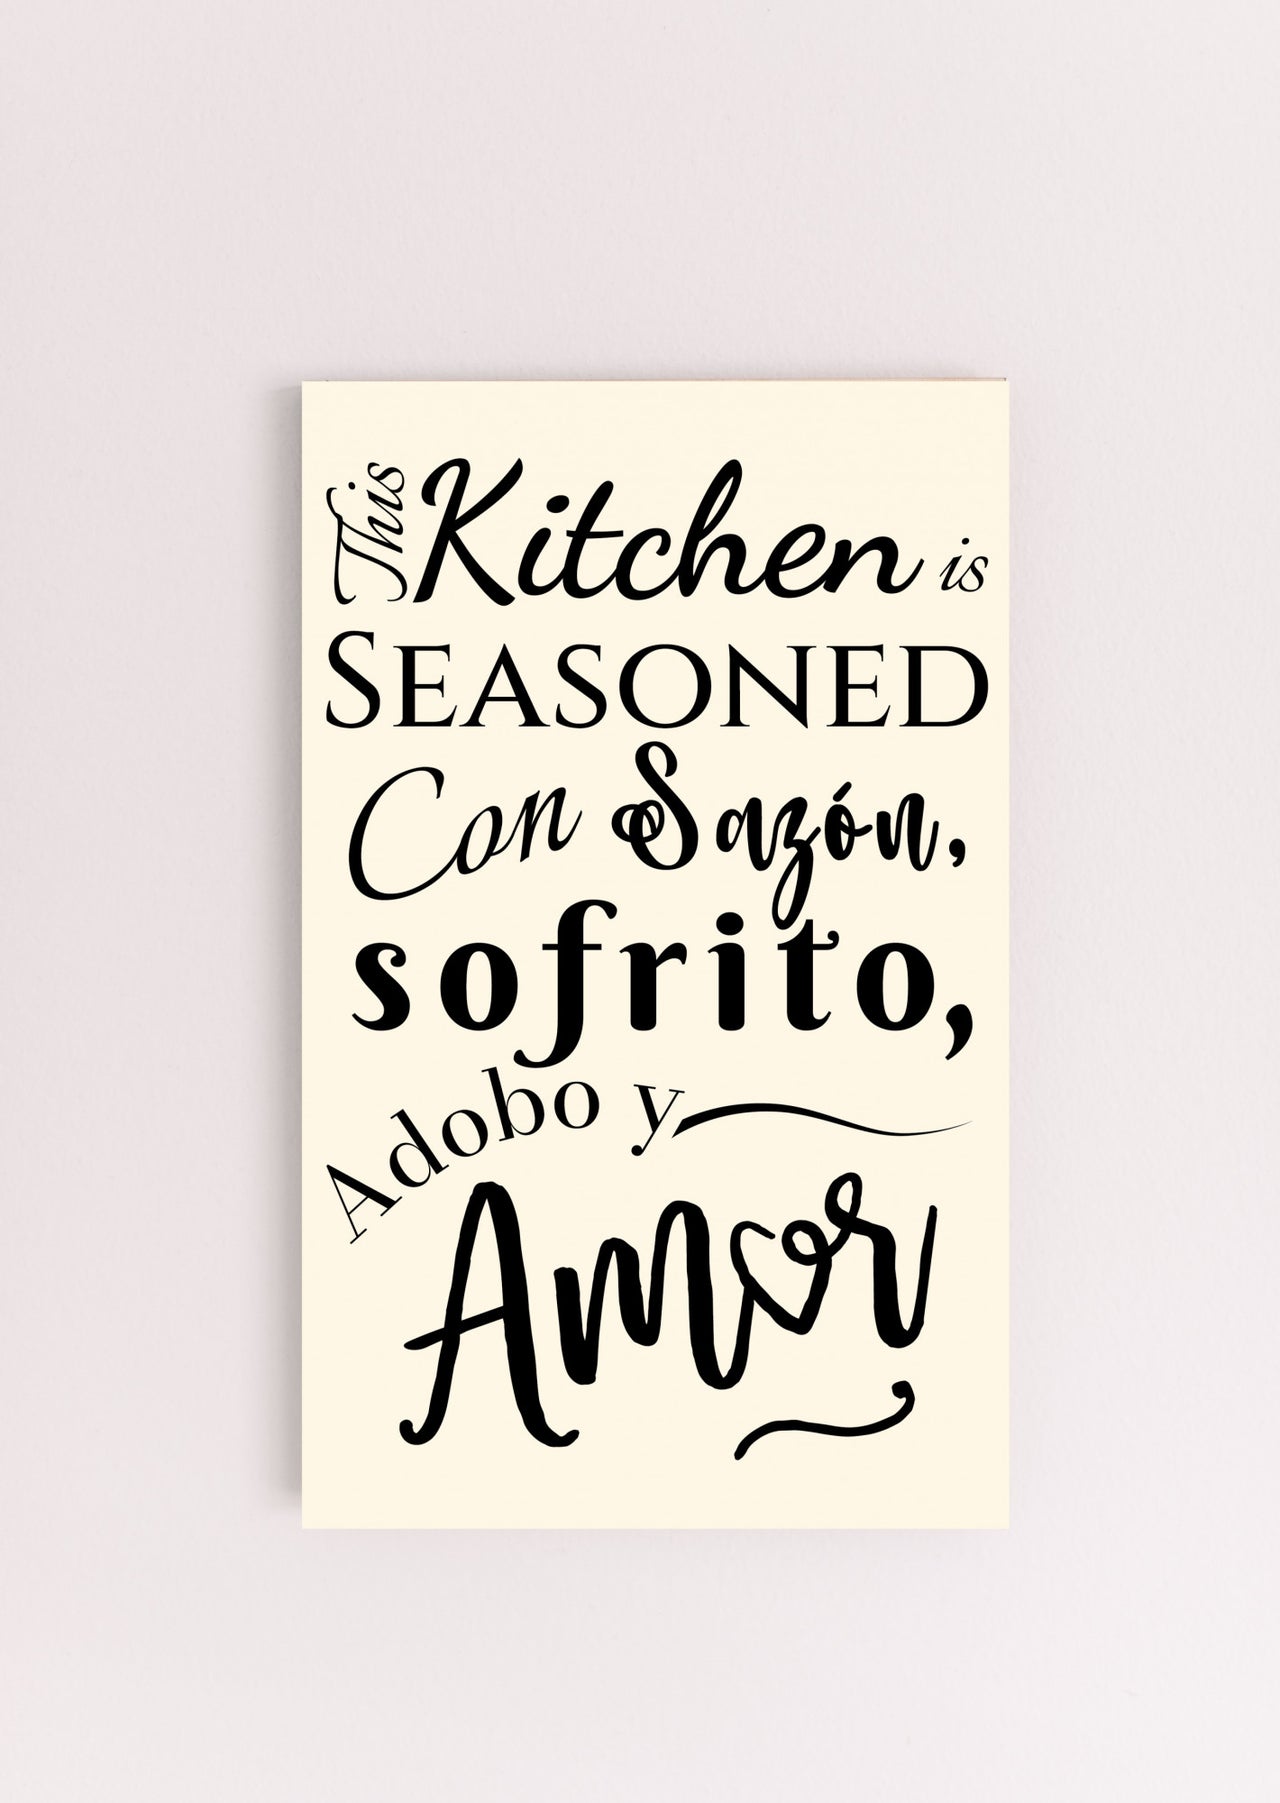 This Kitchen Is Seasoned Con Sazon, Sofrito, Adobo y Amor Wall Art